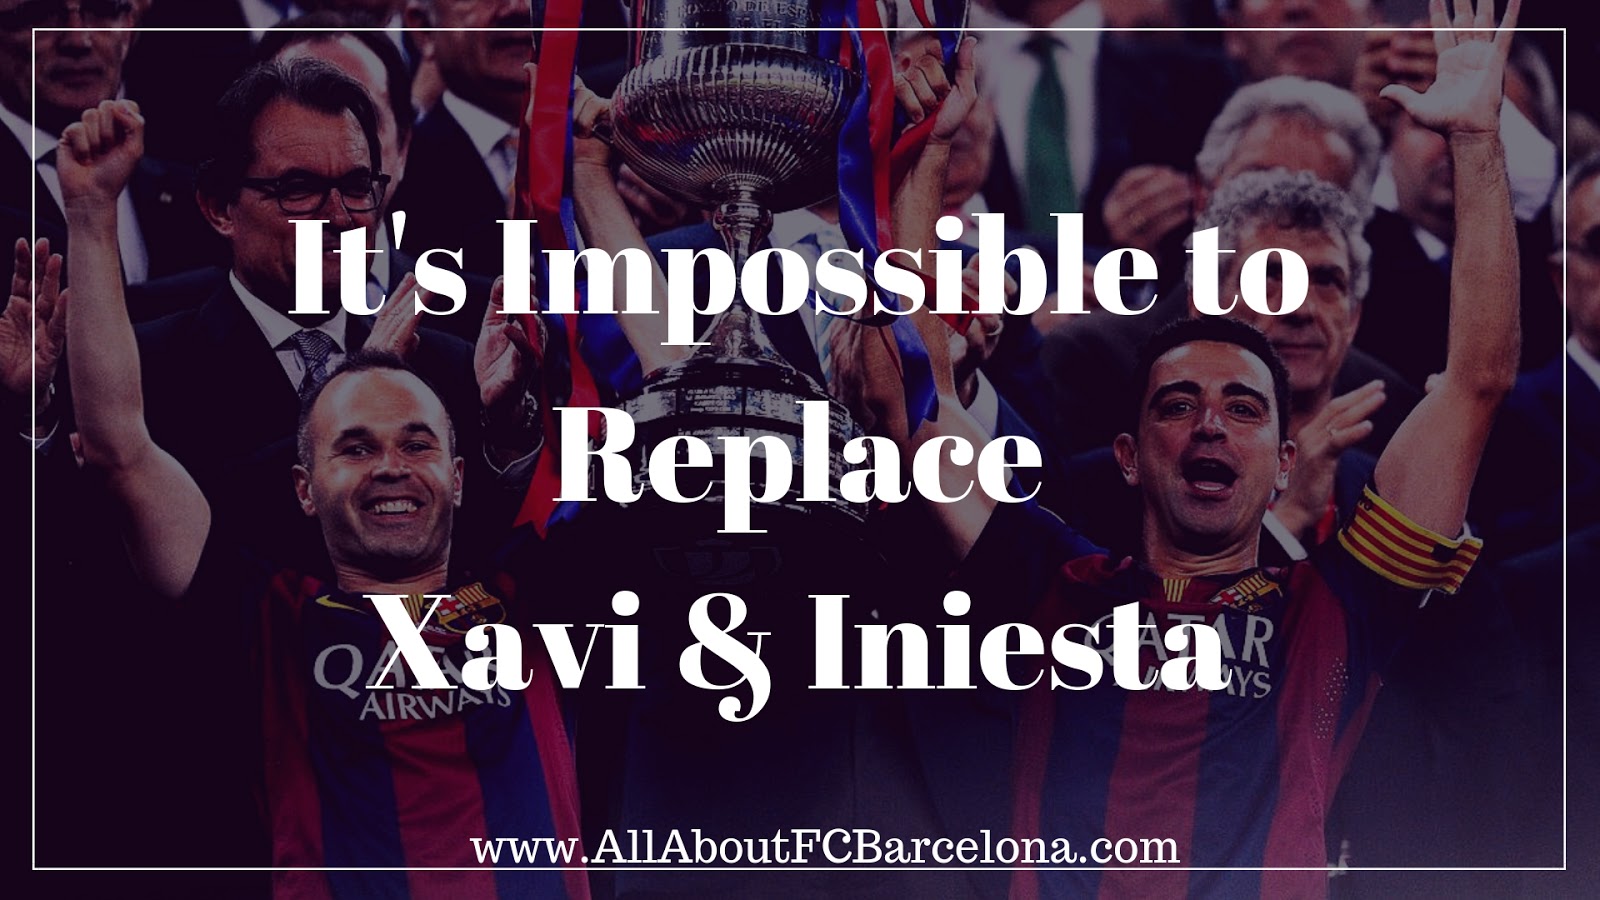 Barcelona won't be able to Replace Iniesta and Xavi #barca #Xavi #iniesta #fcbarcelona